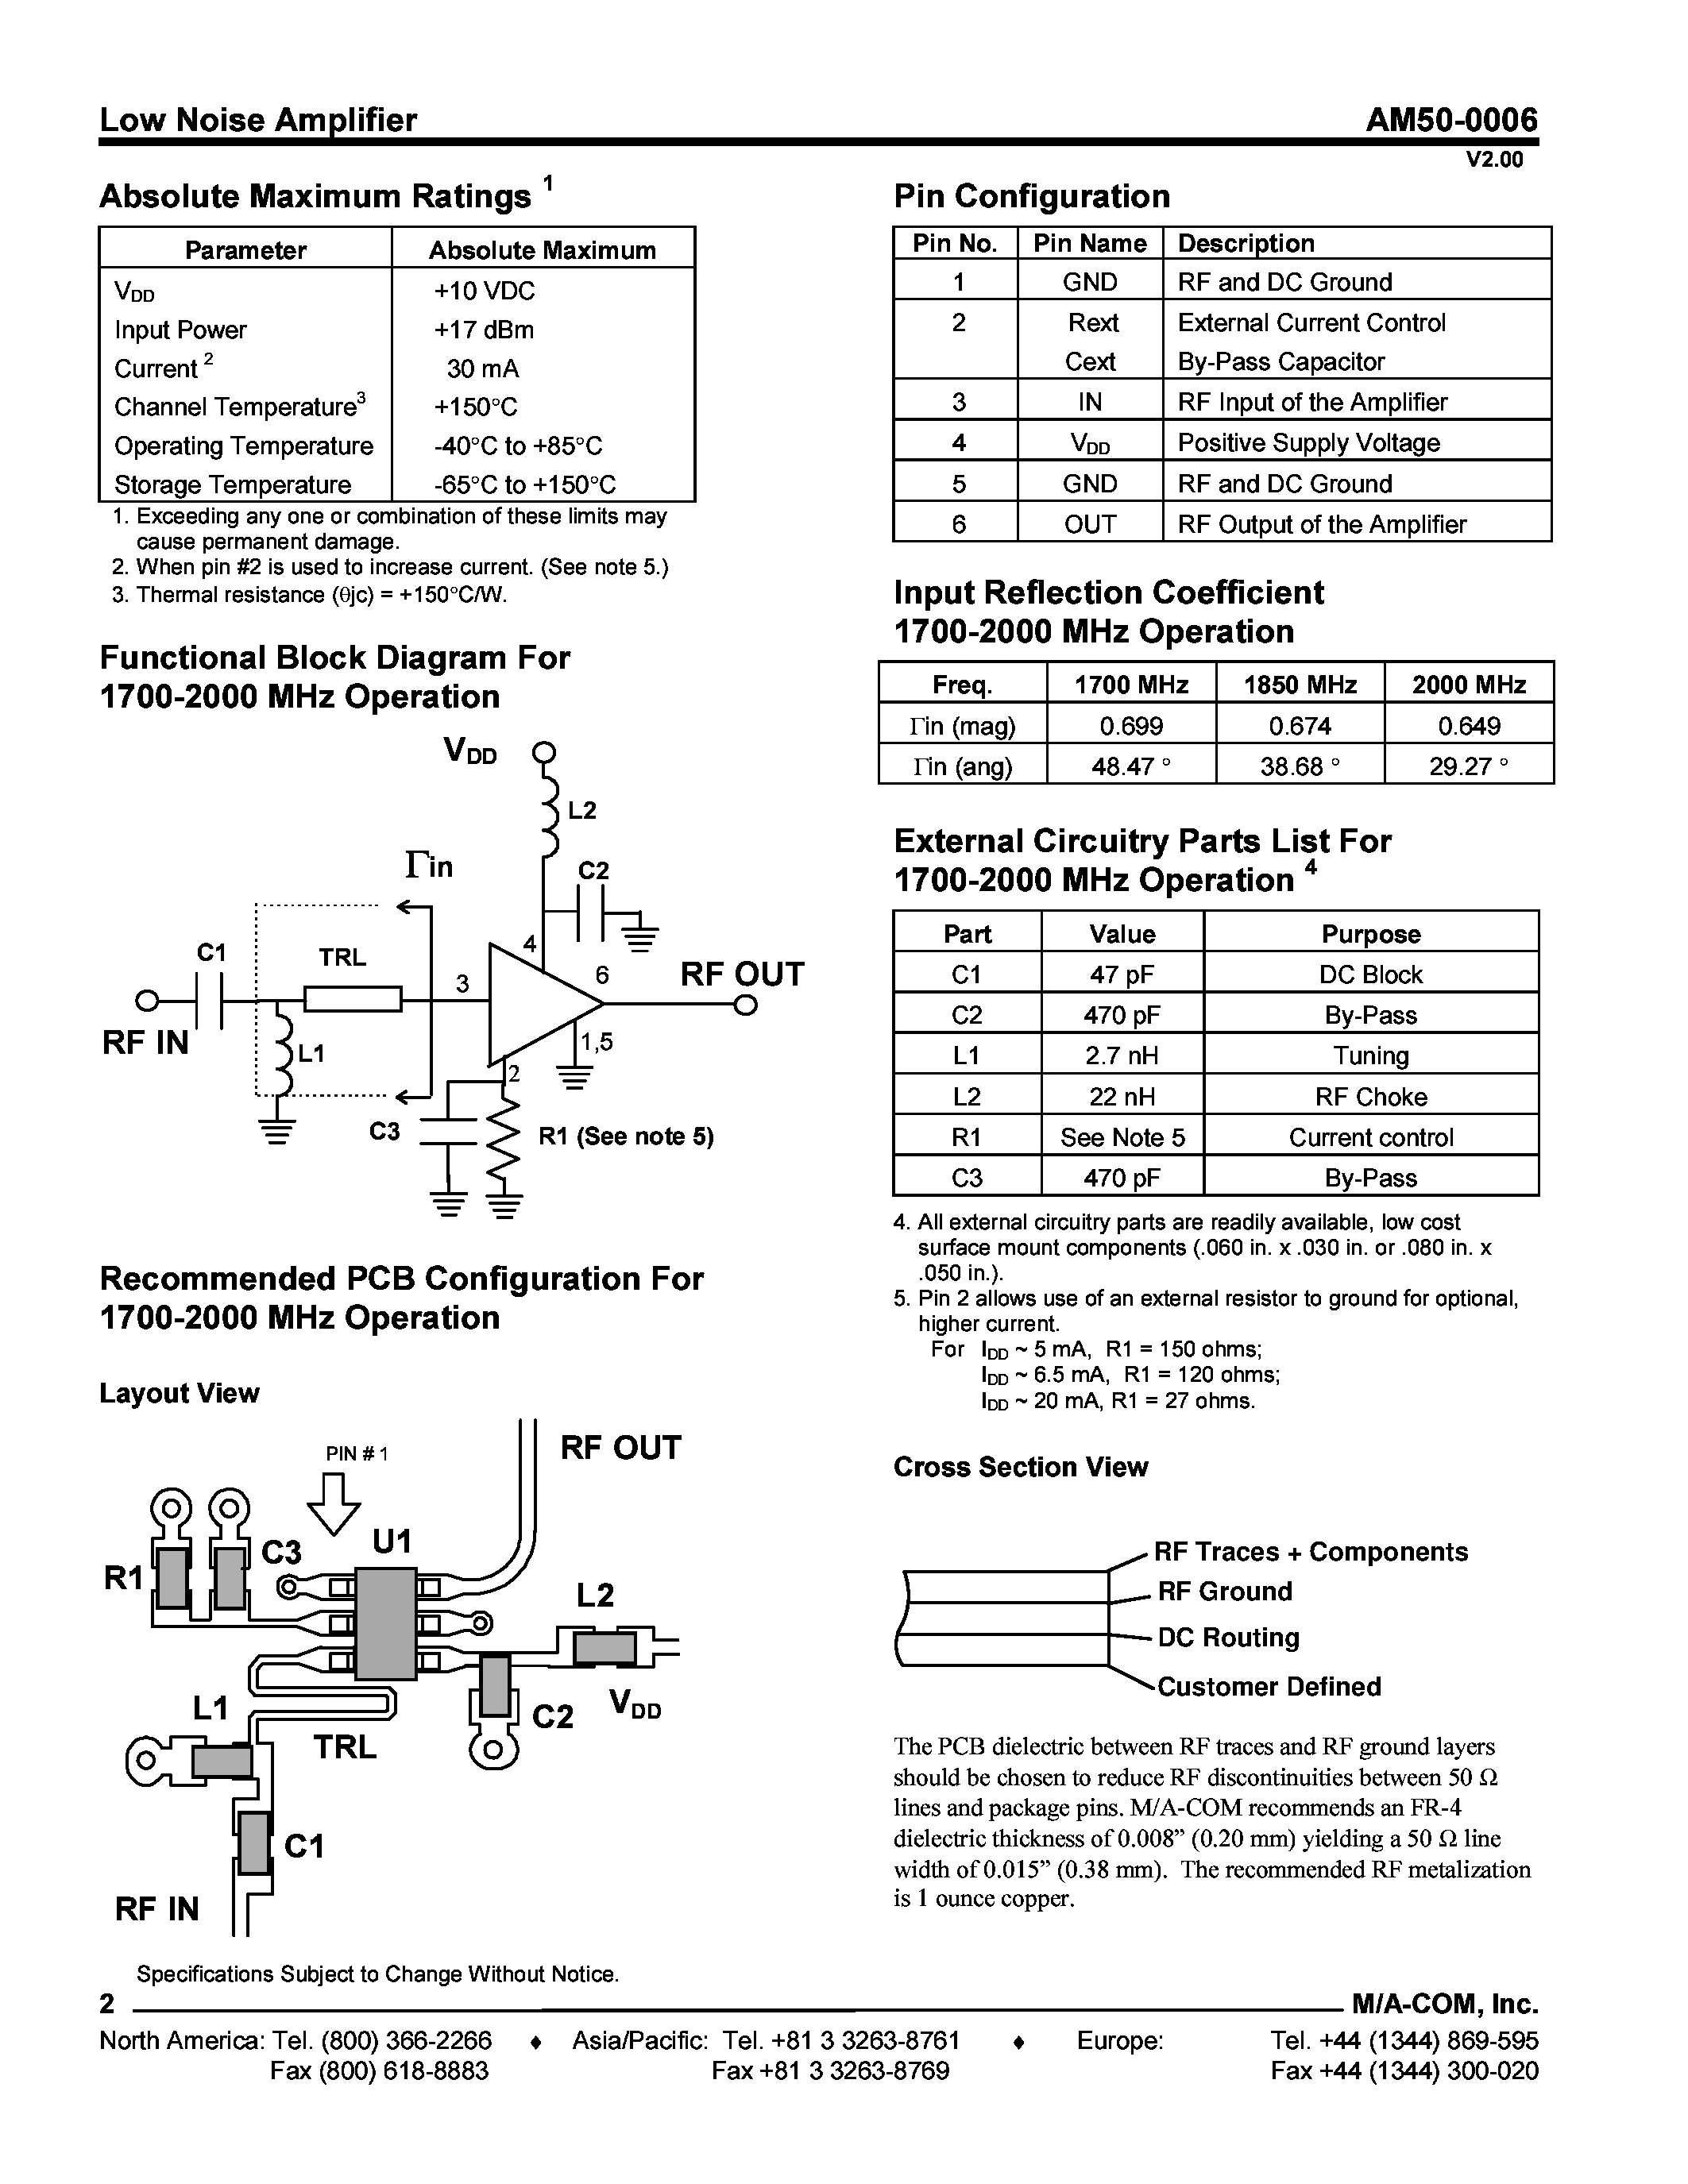 Даташит AM50-0006 - Low Noise Amplifier 1400 - 2000 MHz страница 2